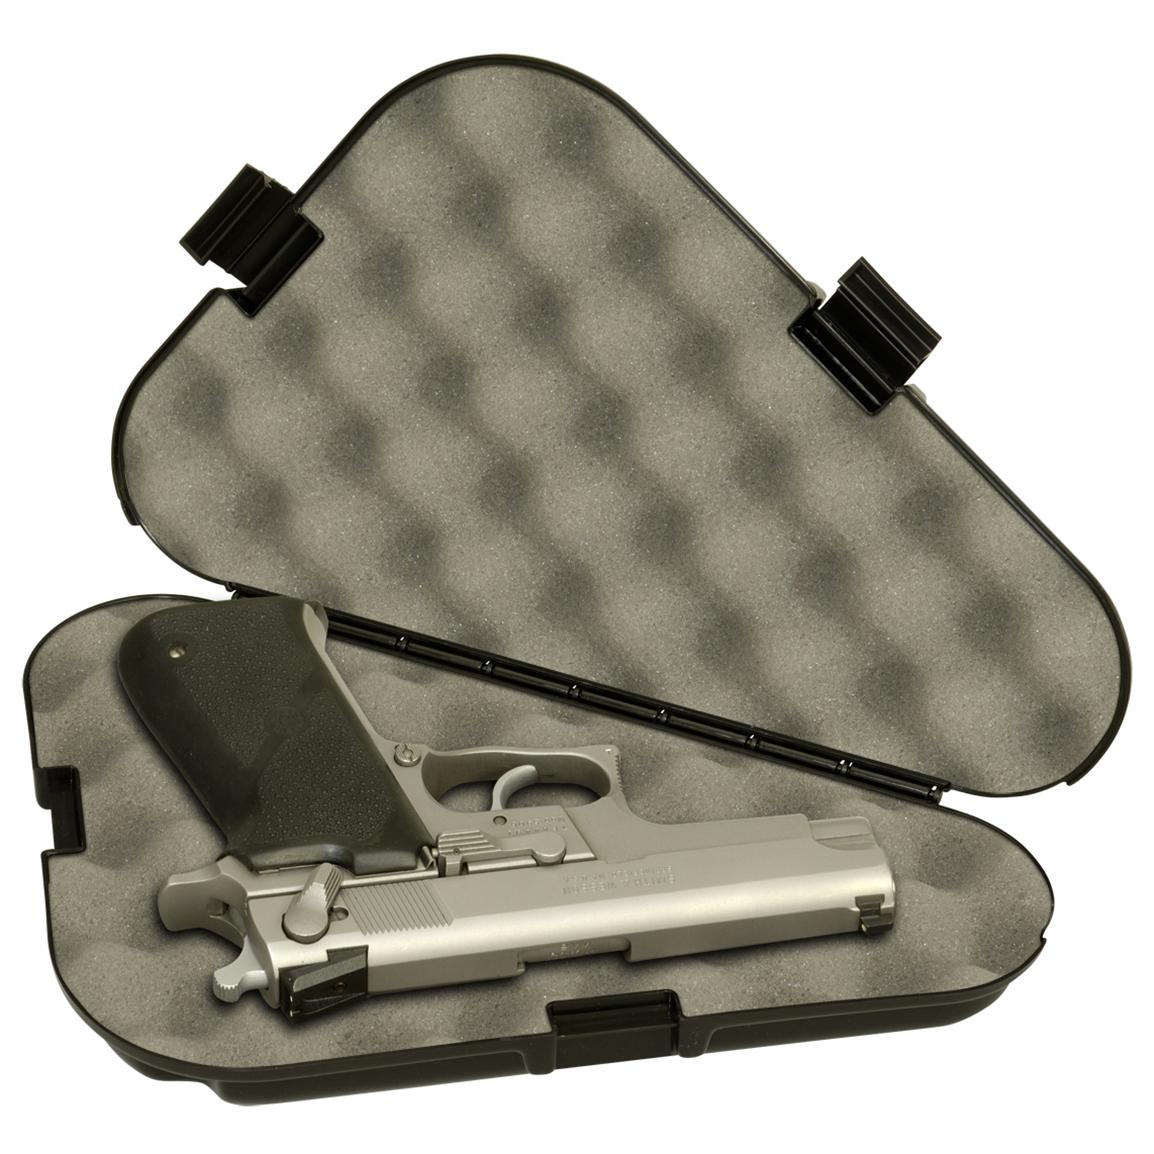 Plano® Hard Pistol Case, Large - 197537, Gun Cases at Sportsman's Guide